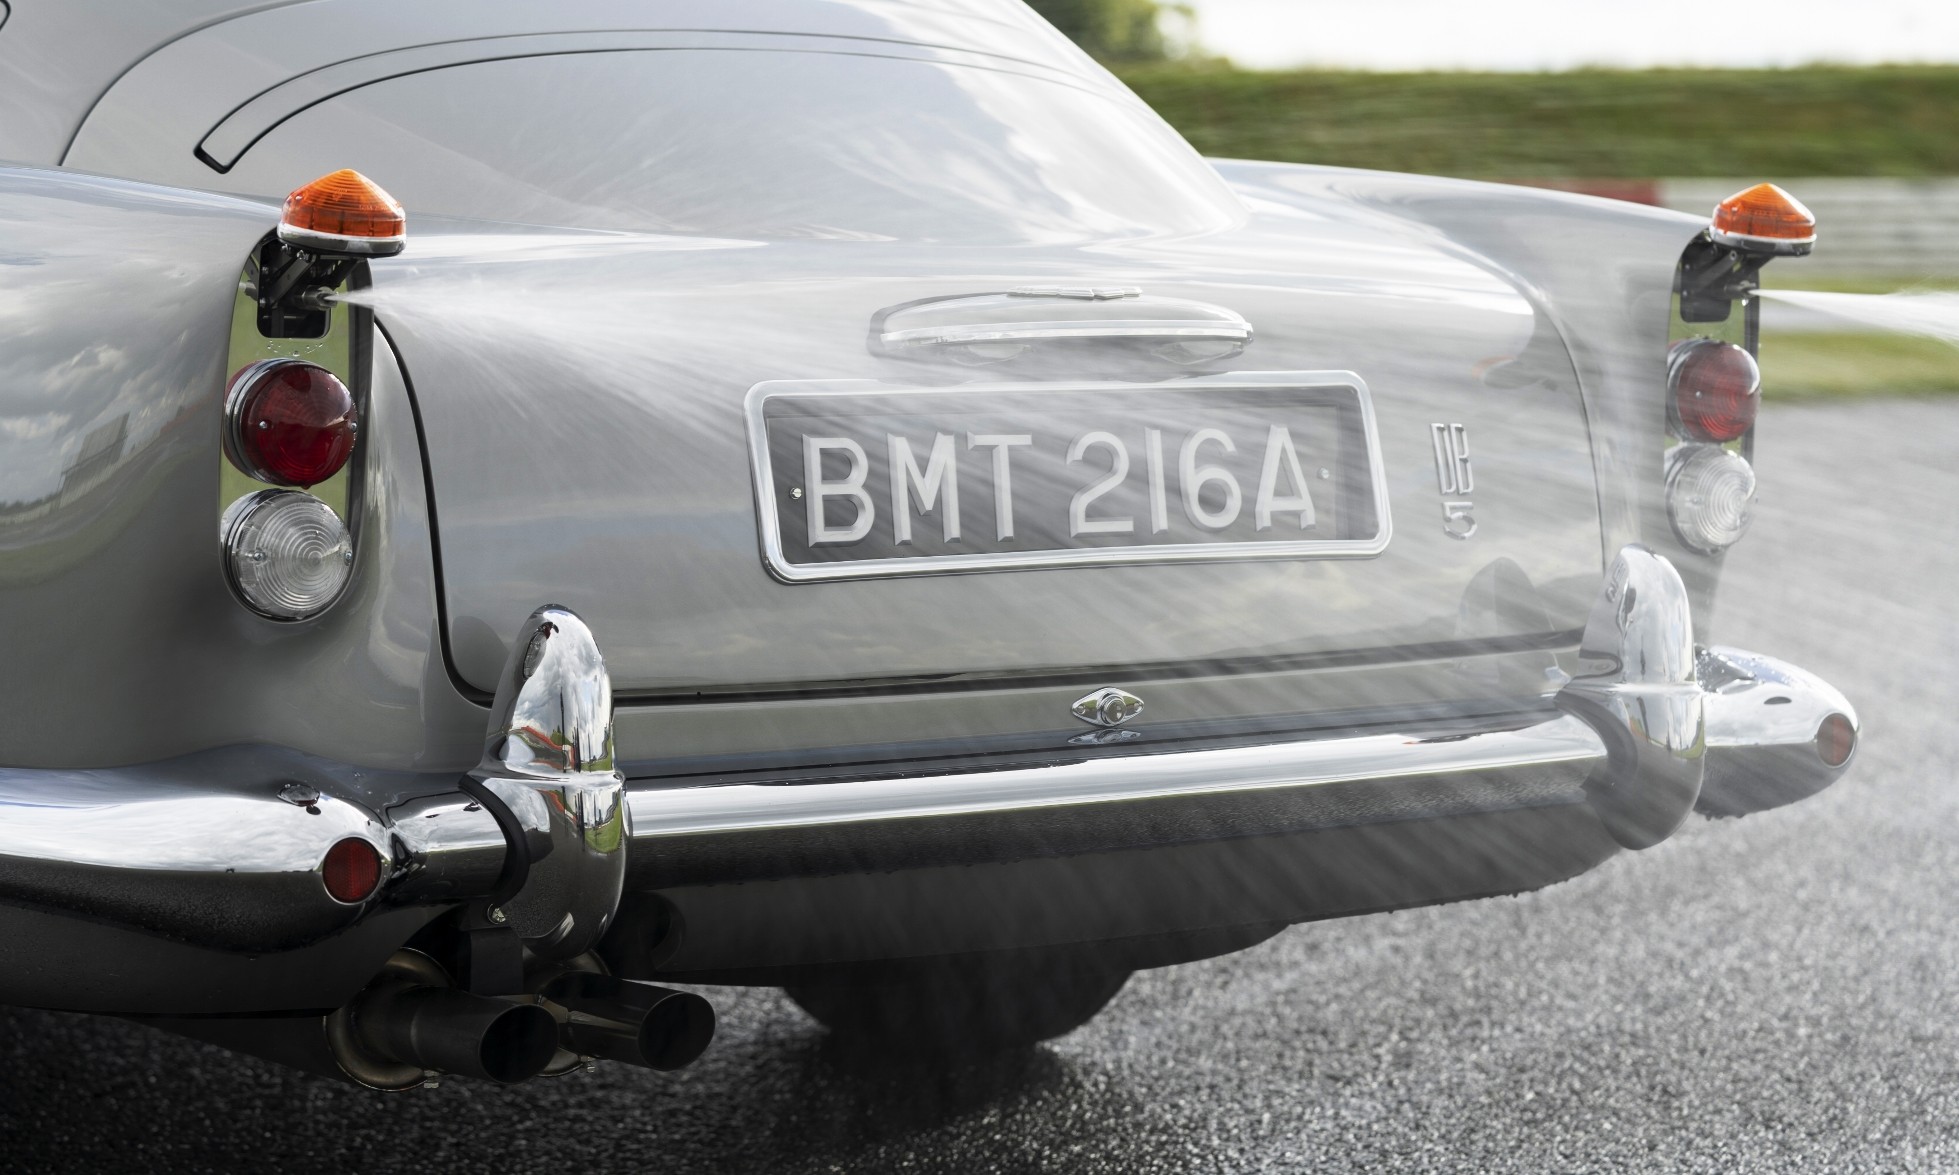 James Bond Aston Martin DB5 oil slick